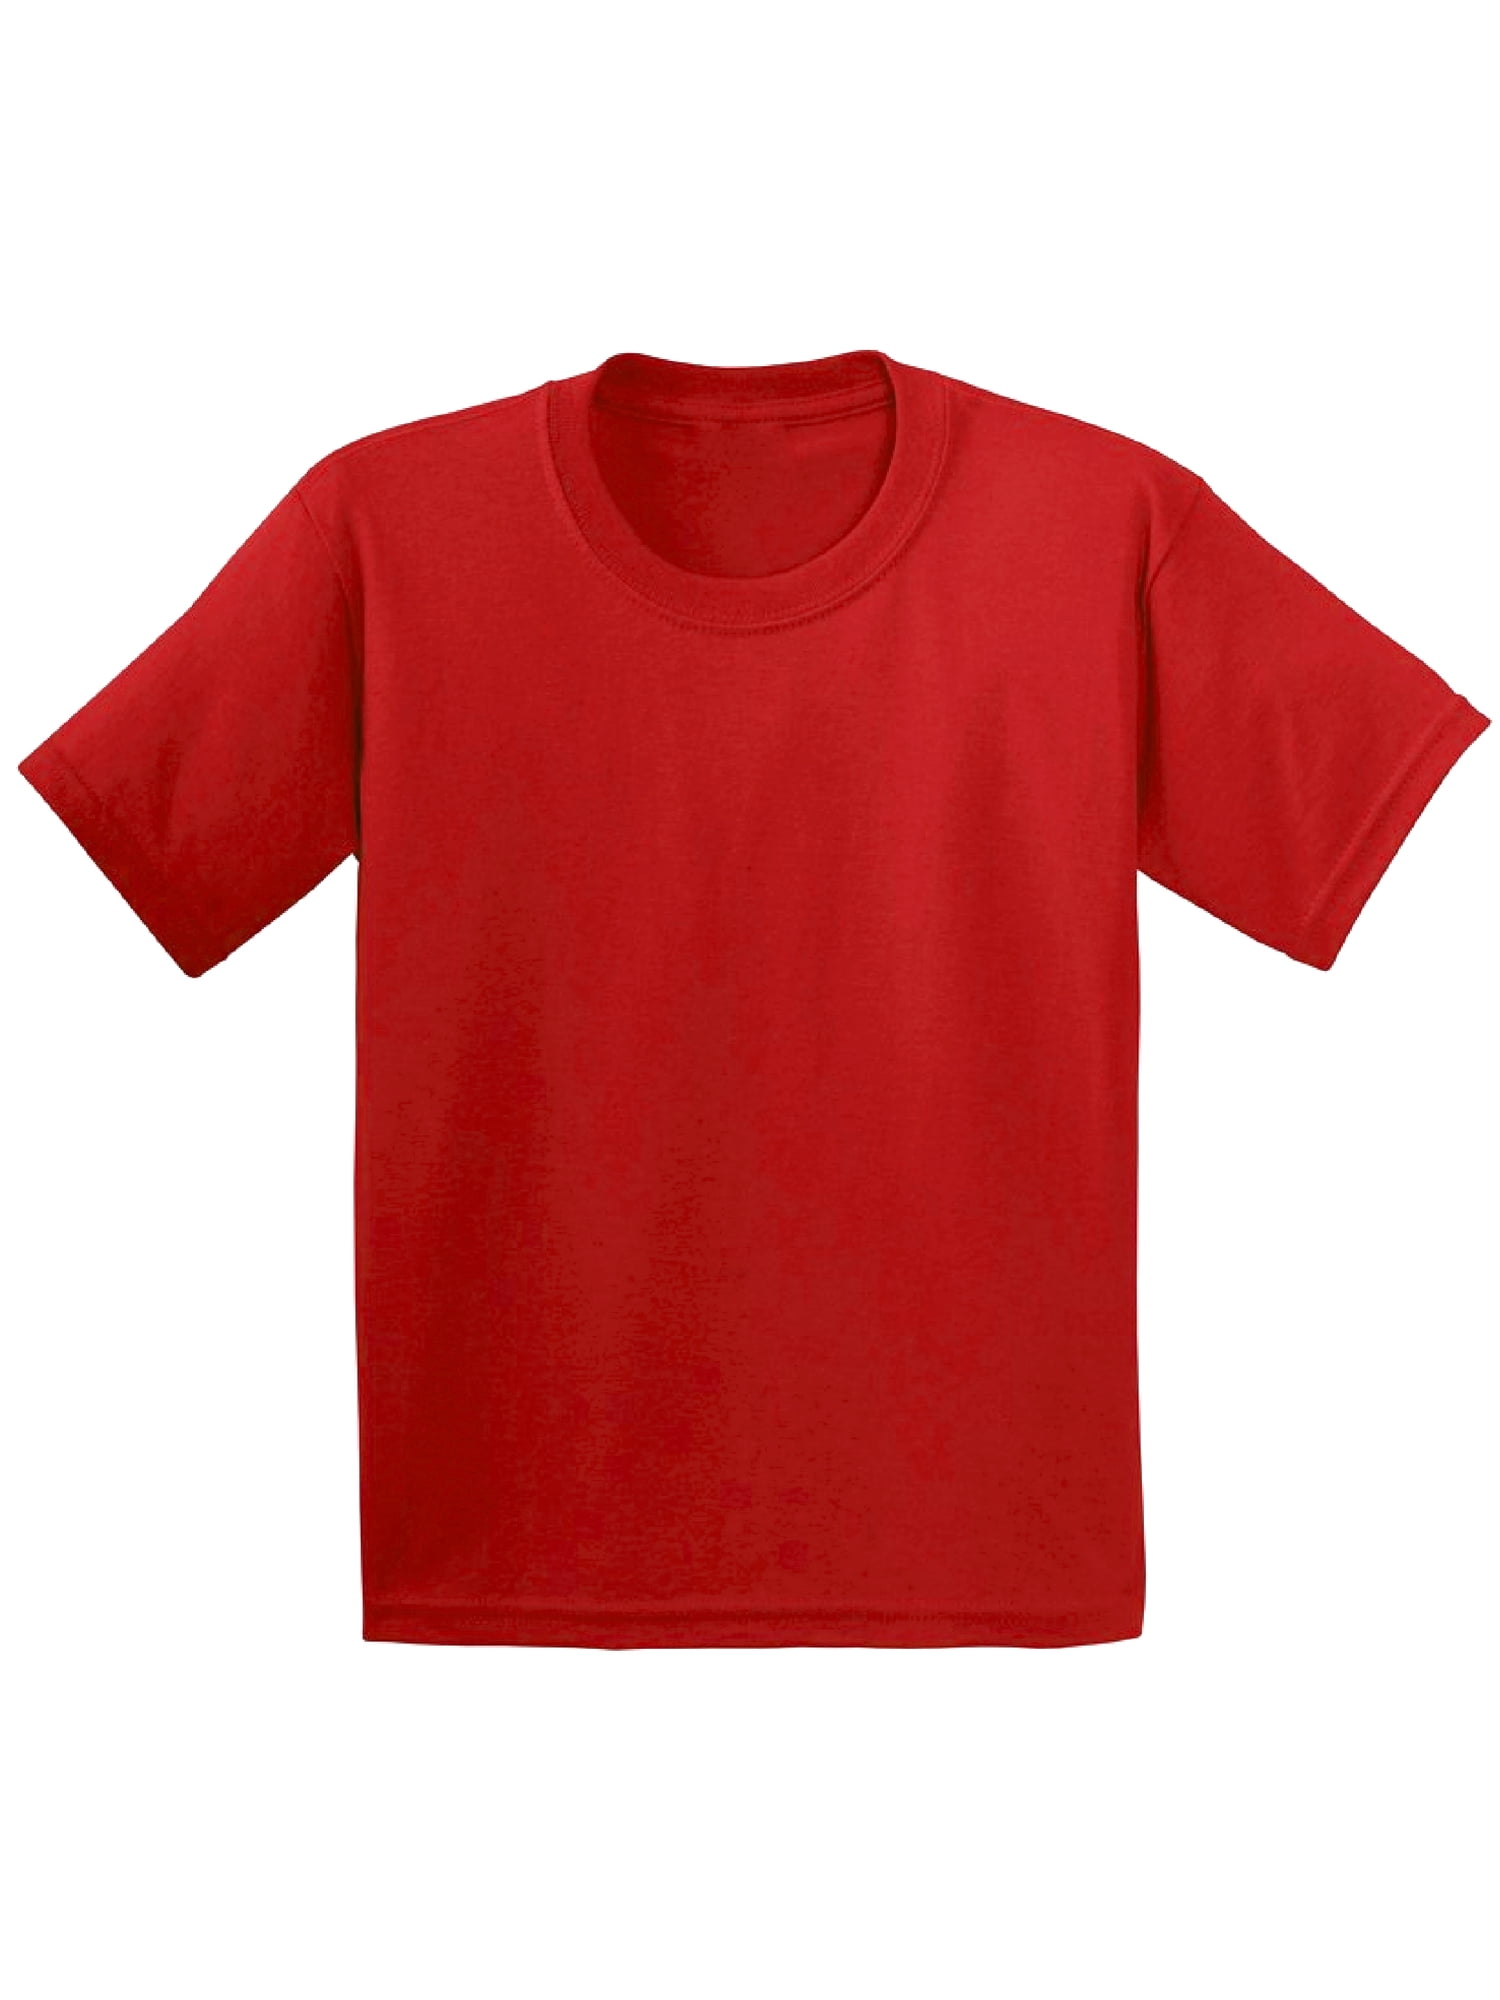 Lucky Brand Infant Boys Printed Woven Shirt 2pc Short Set Size 12M 18M 24M $50 